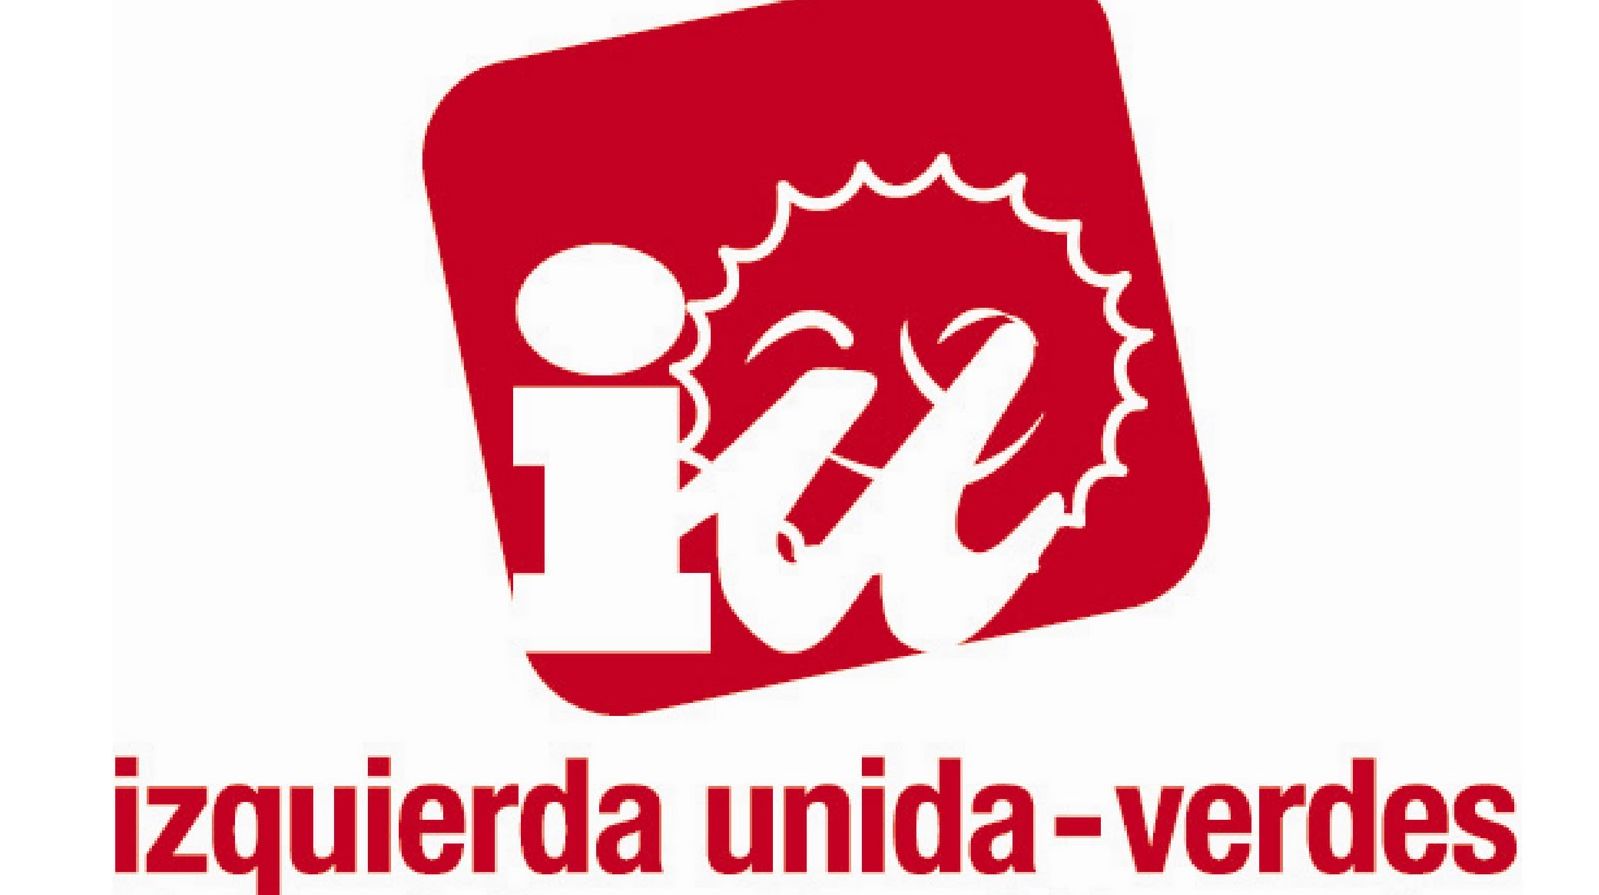 IU Verdes denuncia la “dejadez e inoperancia del PSOE”